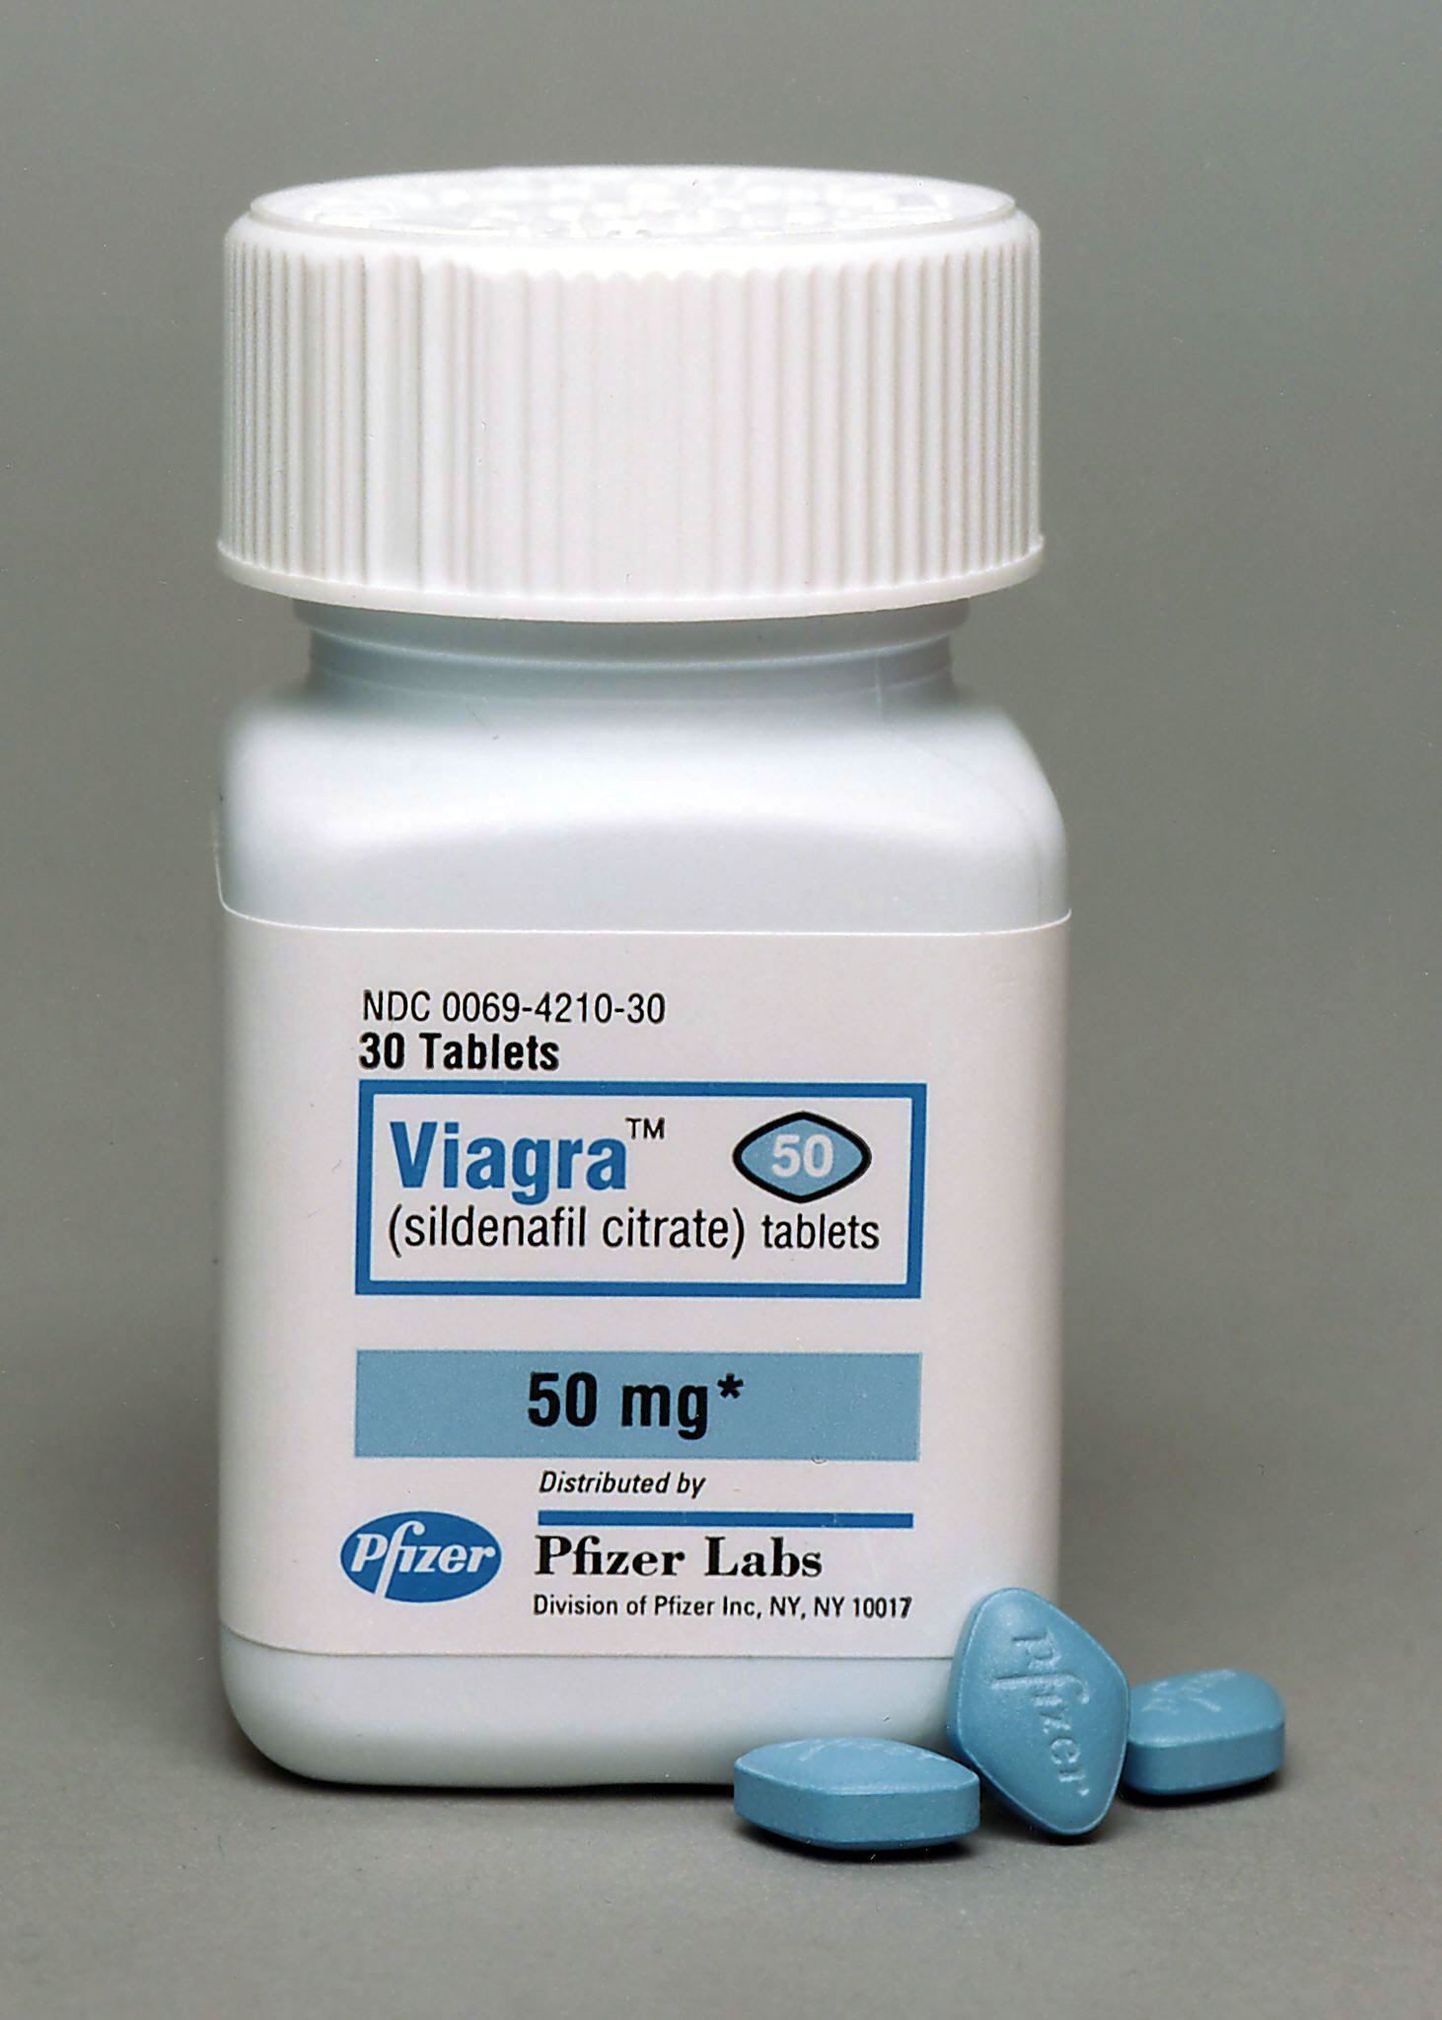 Nahka hõõrutav potentsiravim on mõjusam kui Viagra